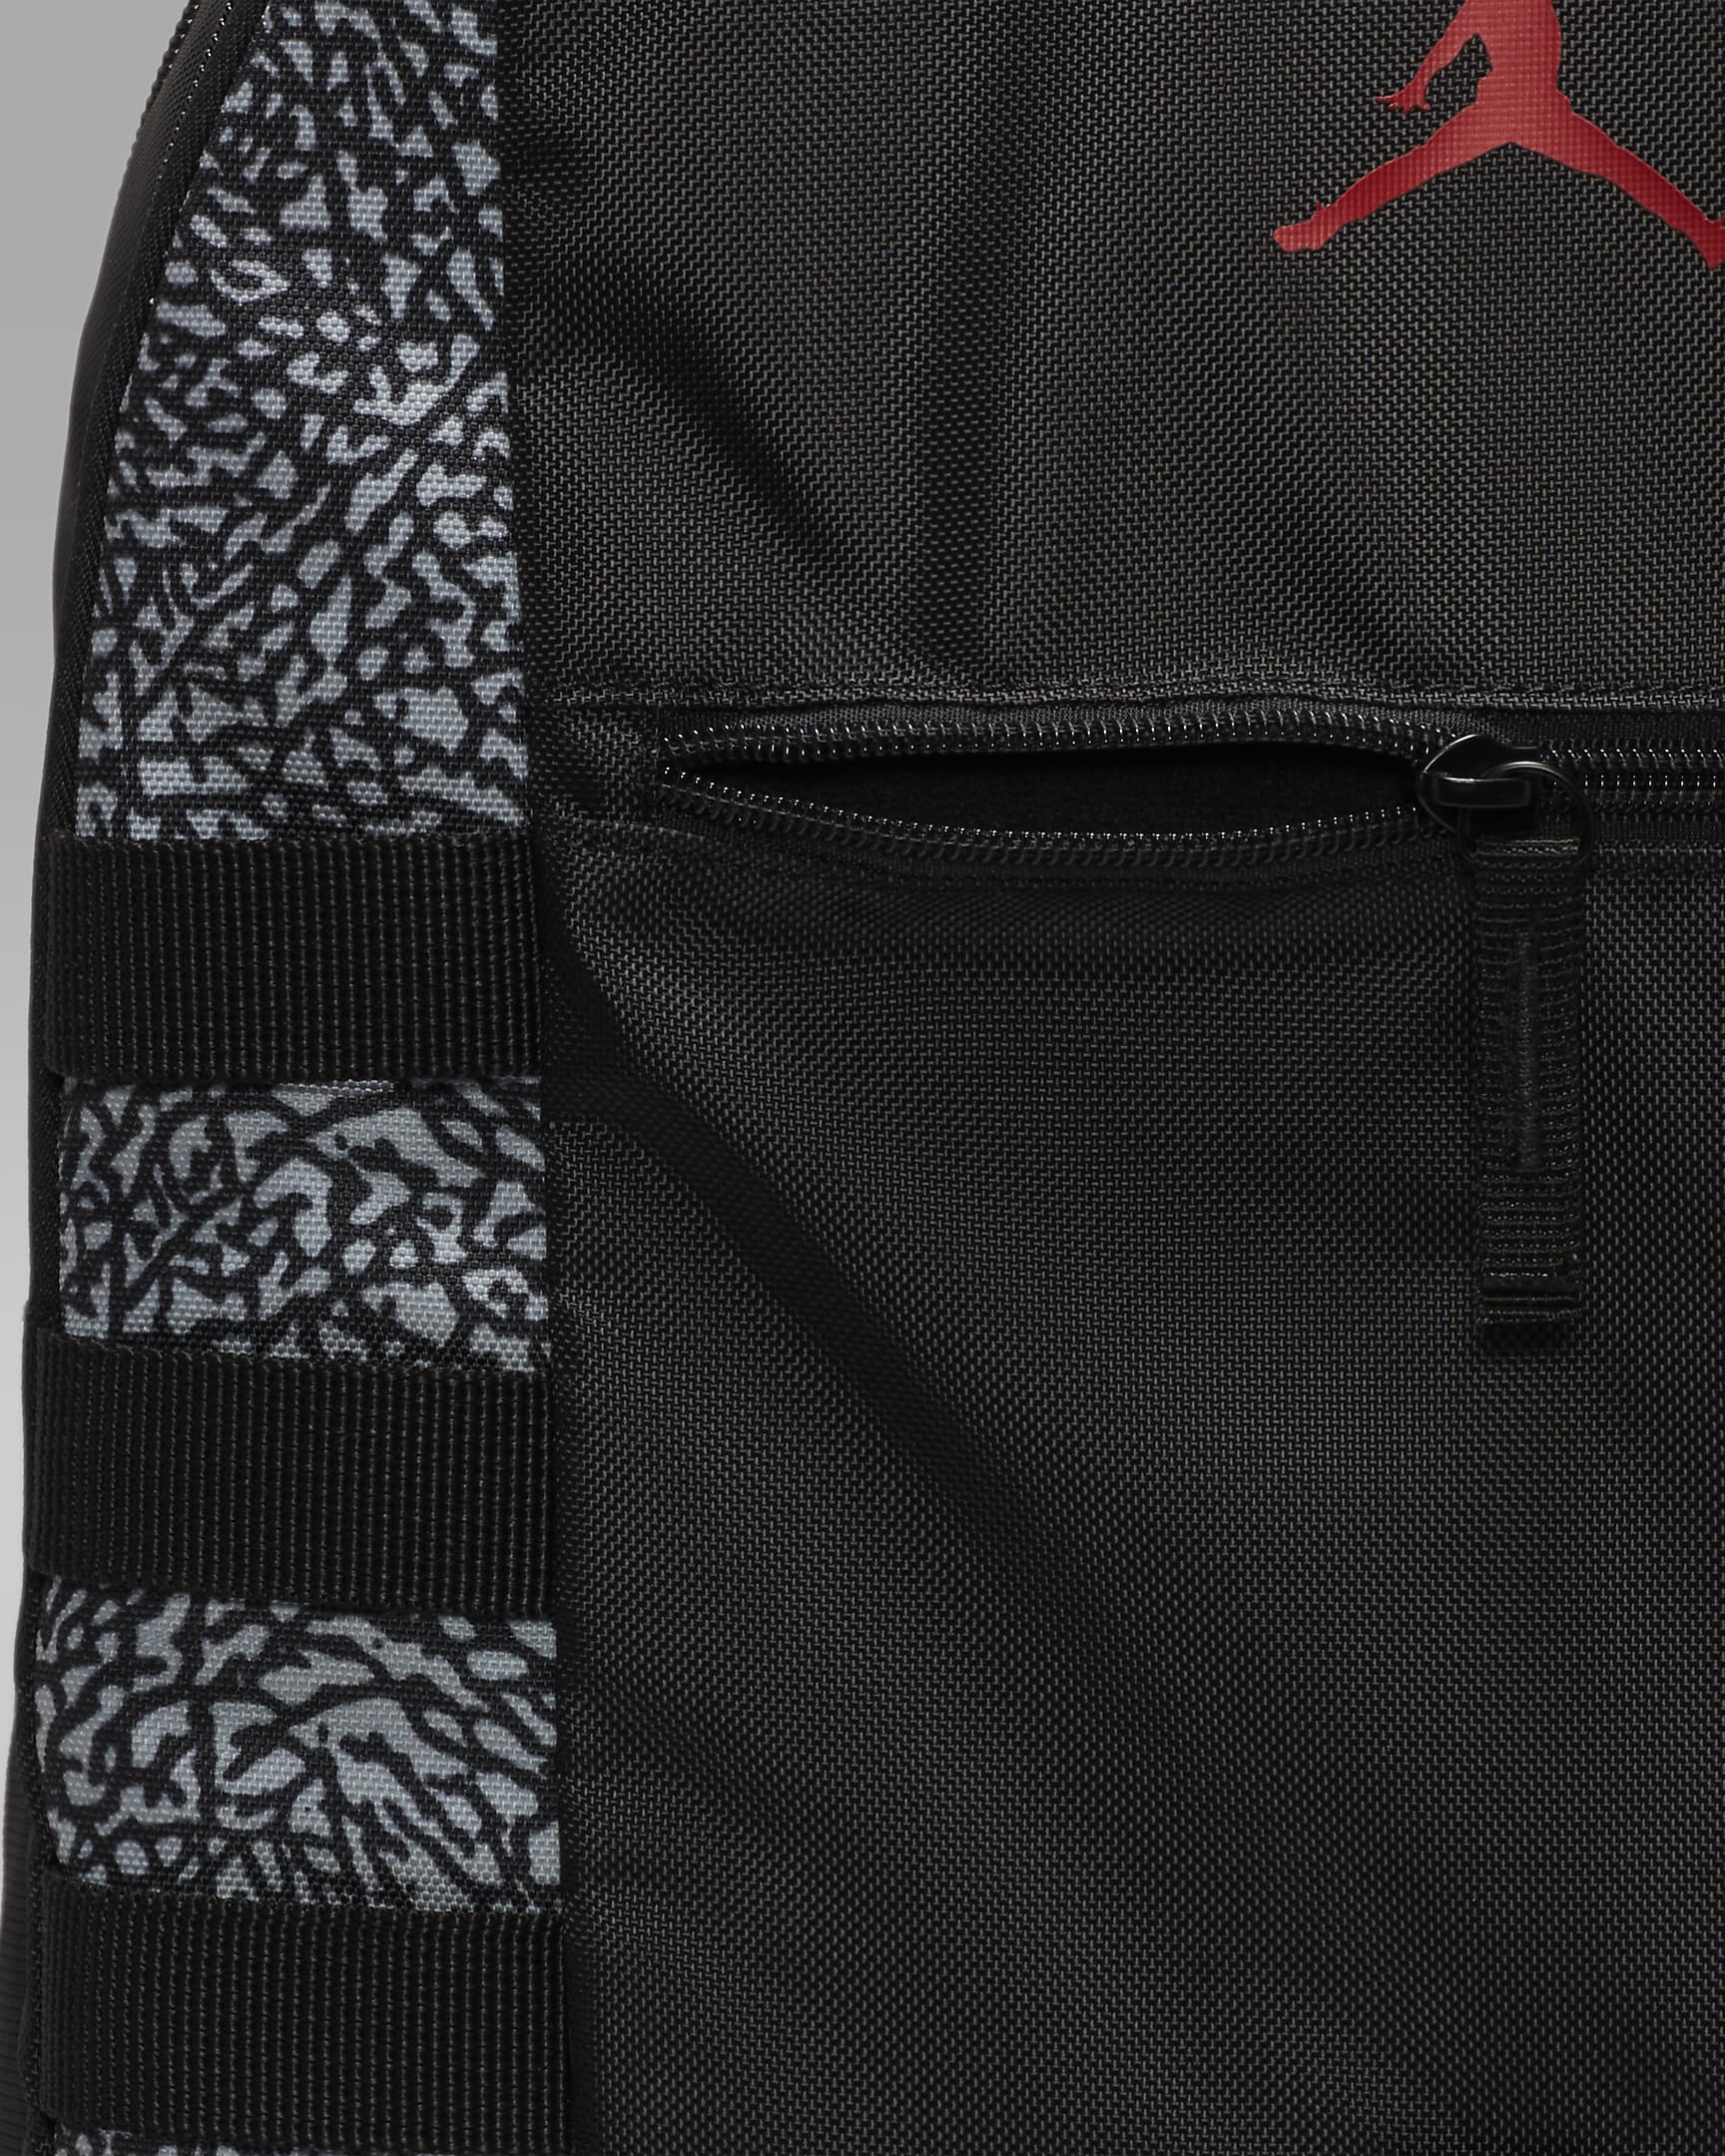 Jordan Sport Backpack. Nike JP